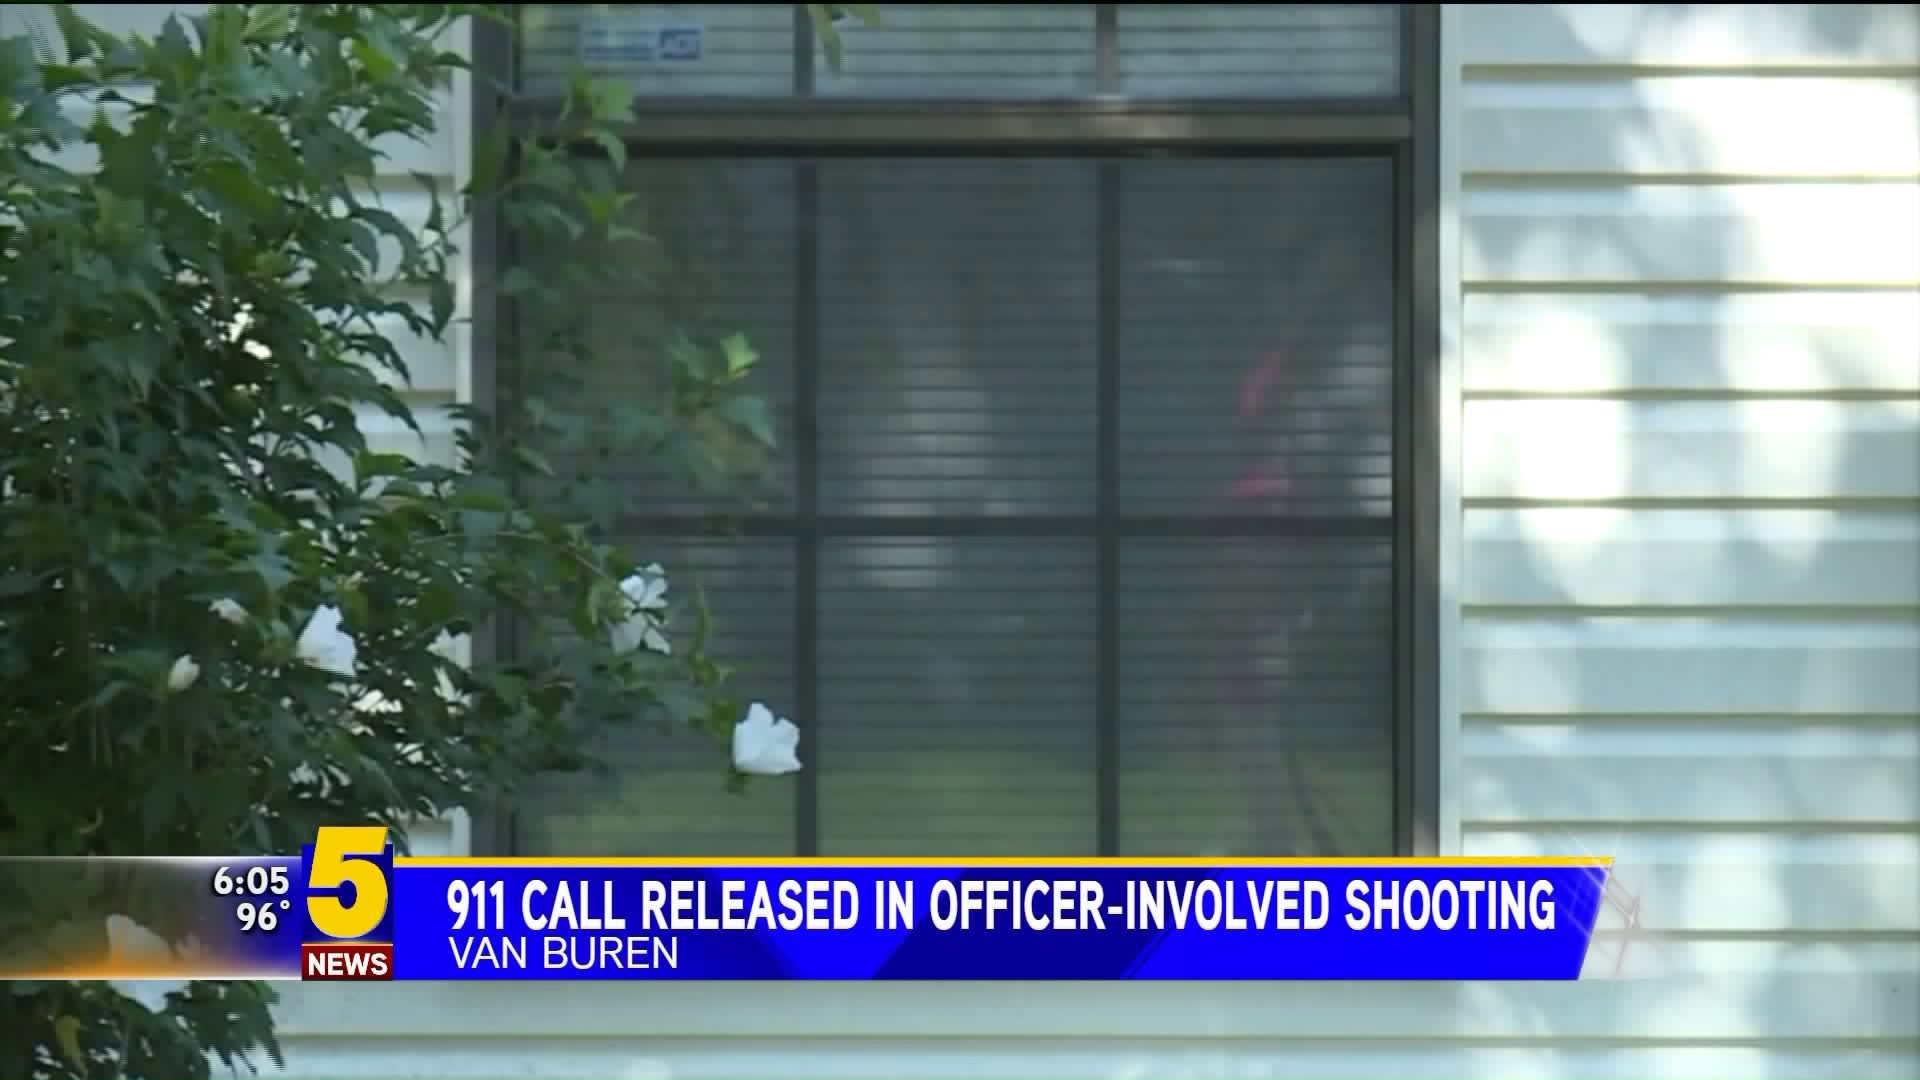 911 Call Released In Van Burn Officer Invovled Shooting